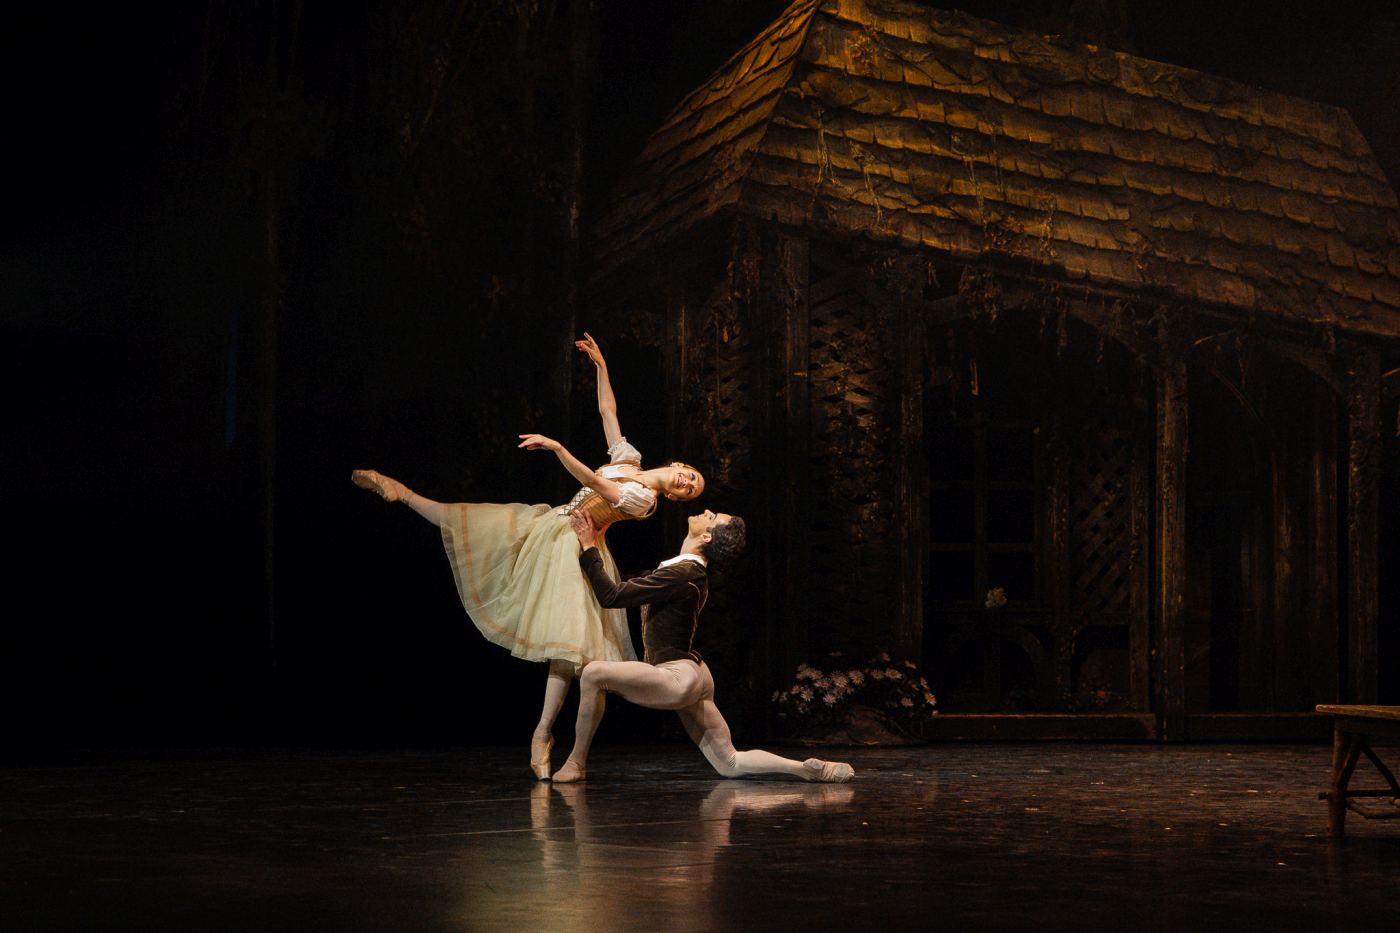 2. K.Ovsyanick (Giselle) and D.Motta Soares (Duke Albrecht), “Giselle” by P.Bart after J.Coralli and J.Perrot, State Ballet Berlin 2022 © M.Kulchytska